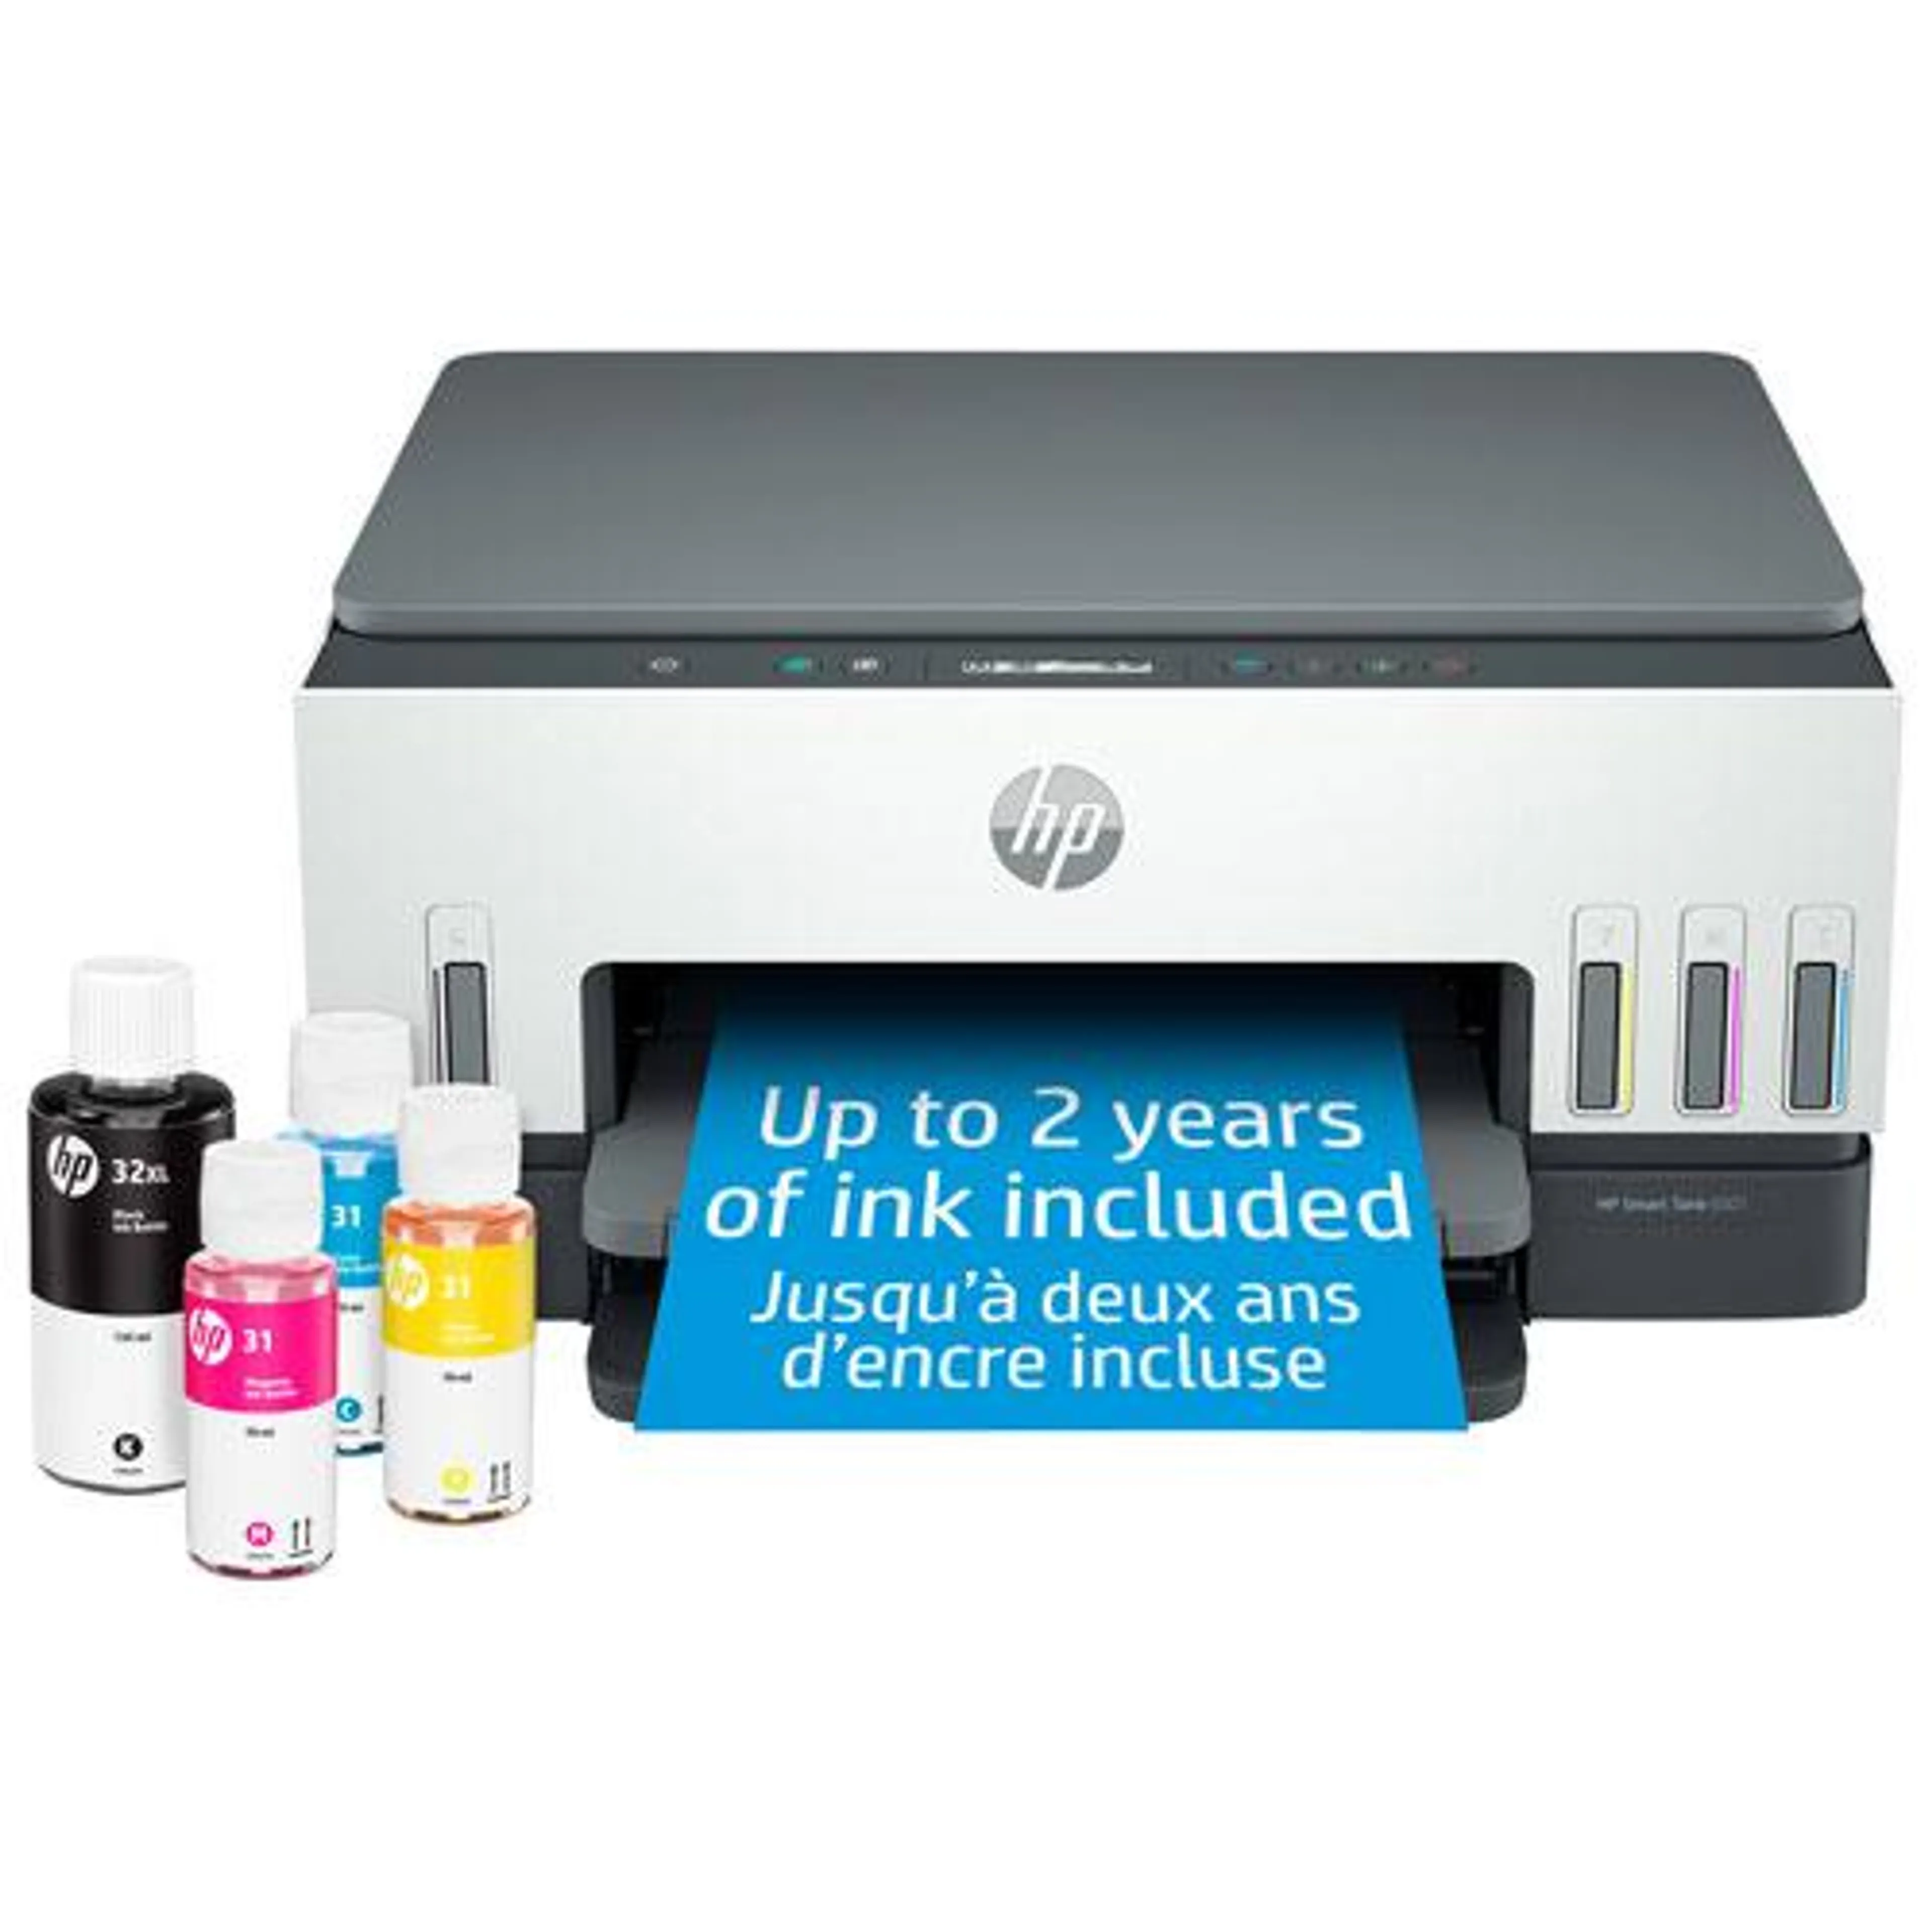 HP Smart Tank 6001 All-In-One Inkjet Printer